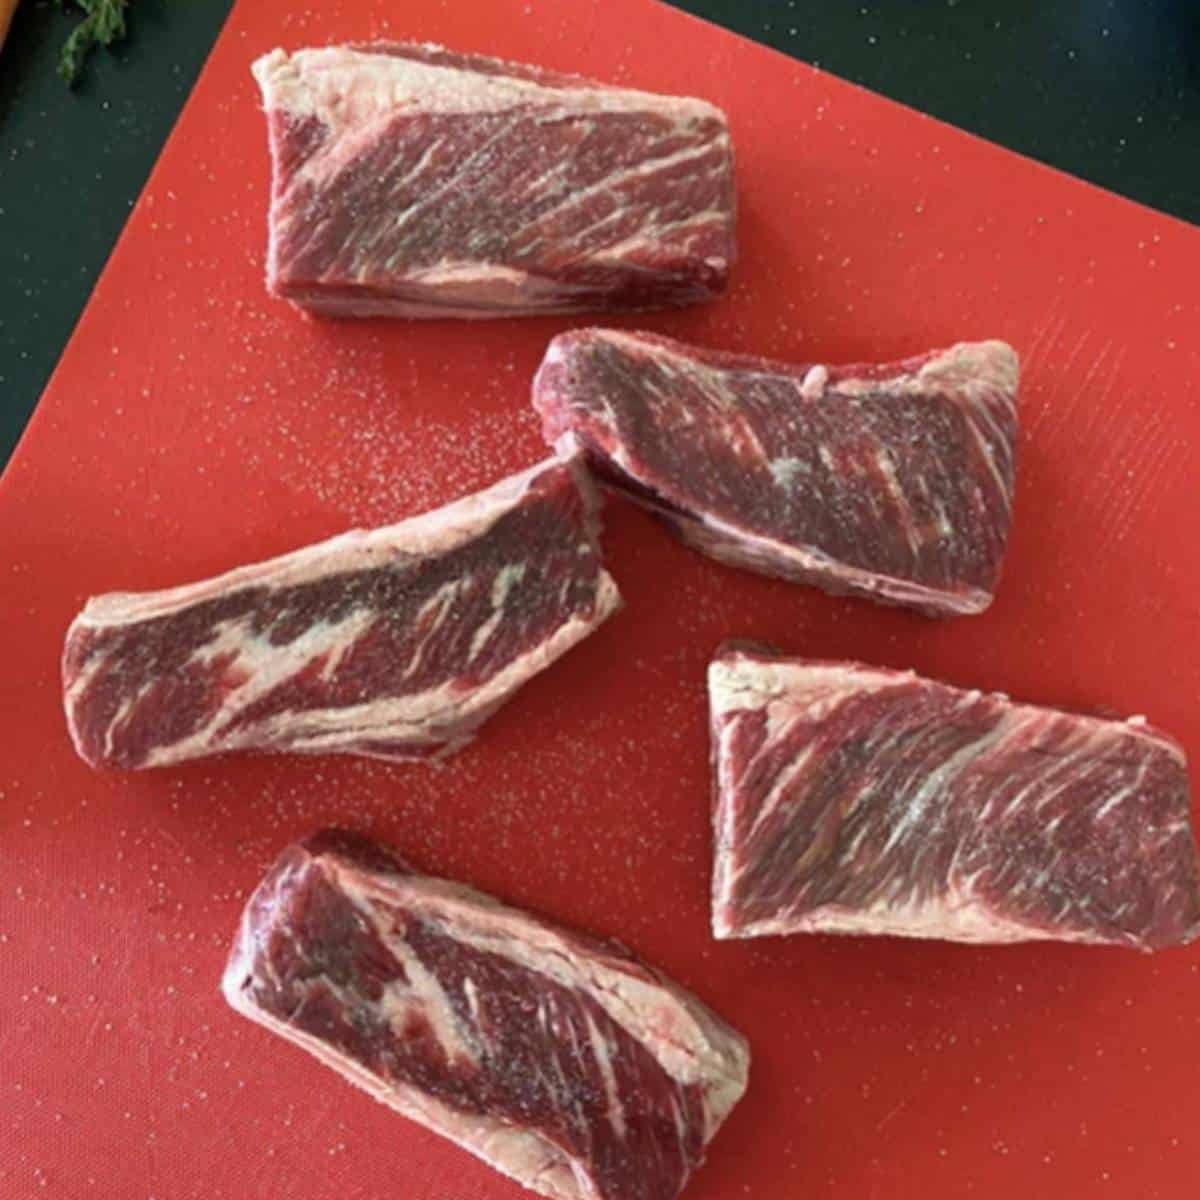 Boneless beef short ribs on cutting board.